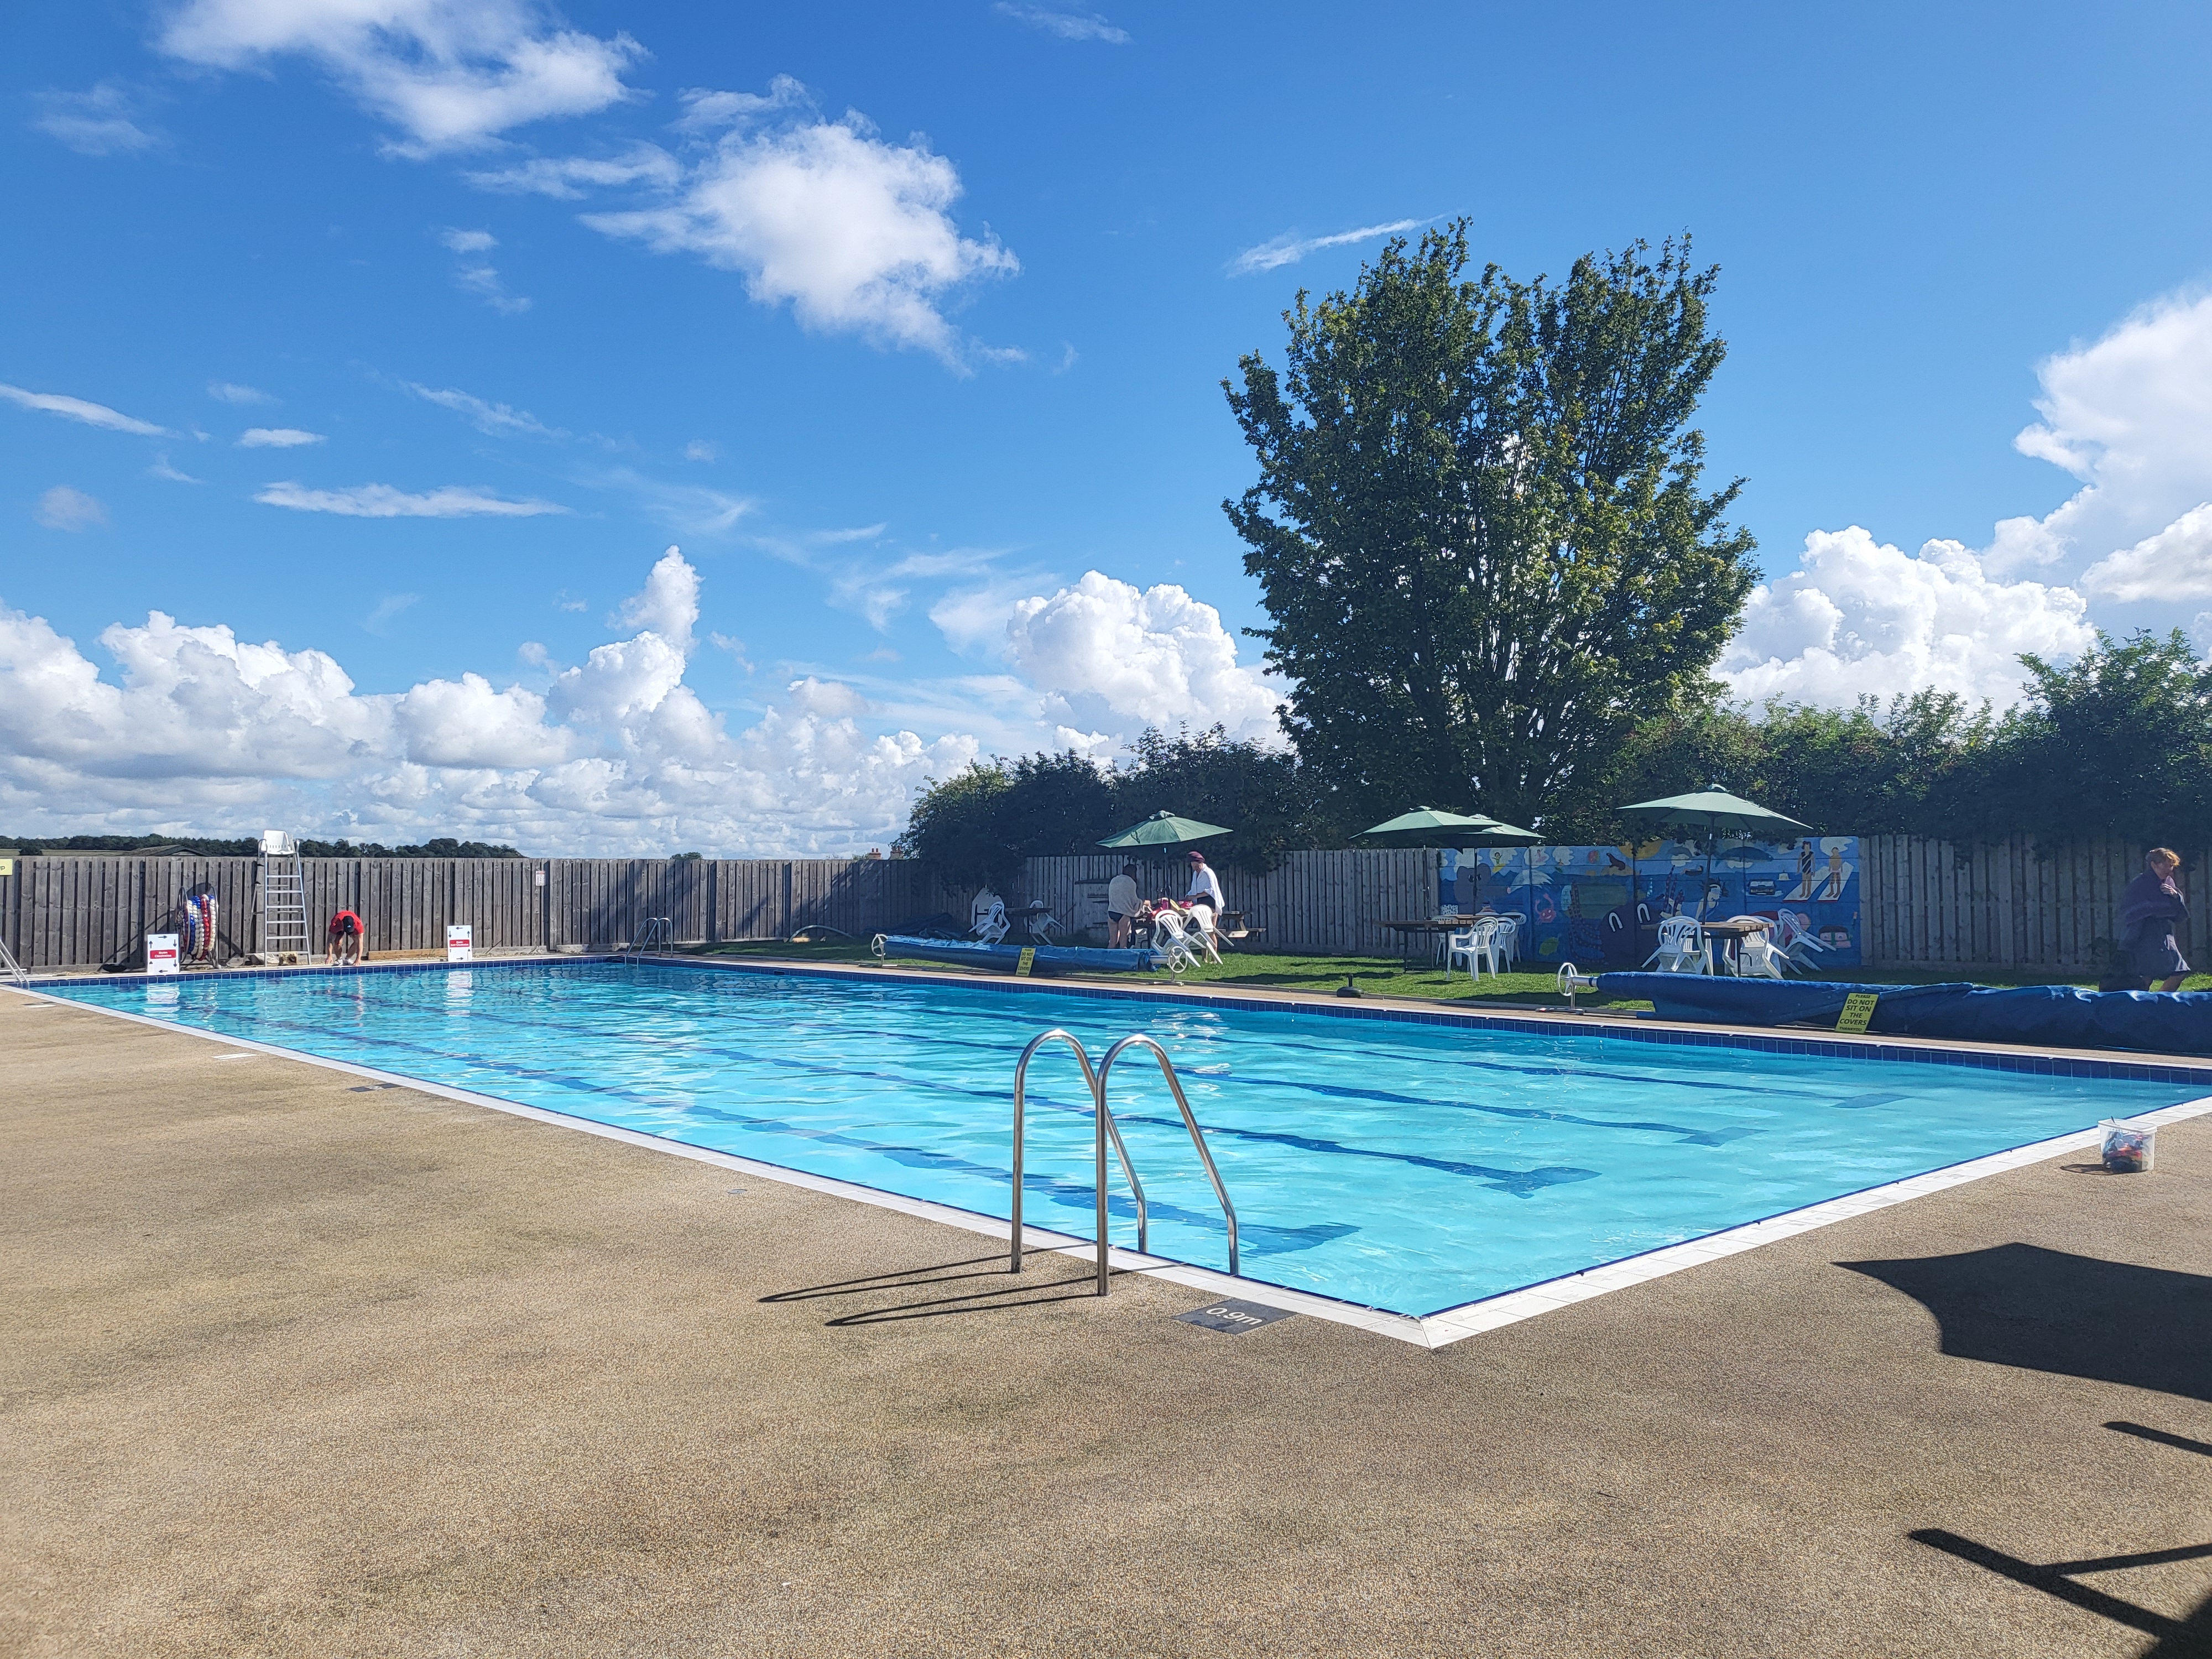 Helmsley open air swimming pool